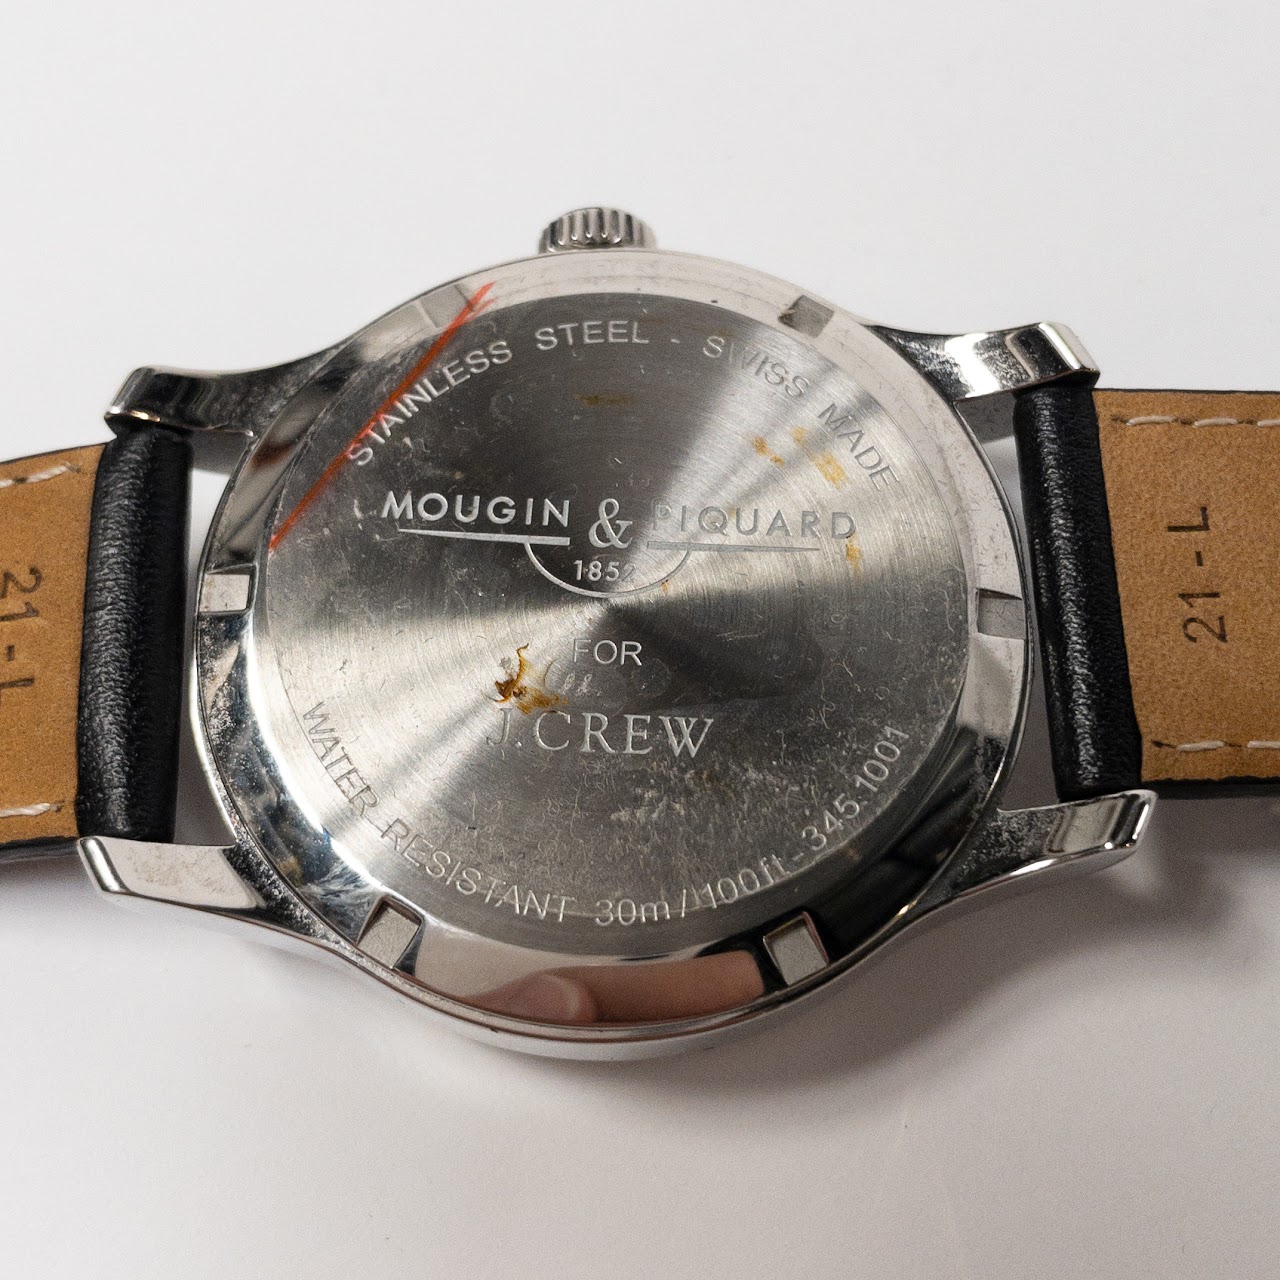 Mougin & Piquard for J. Crew Grande Seconde Wristwatch